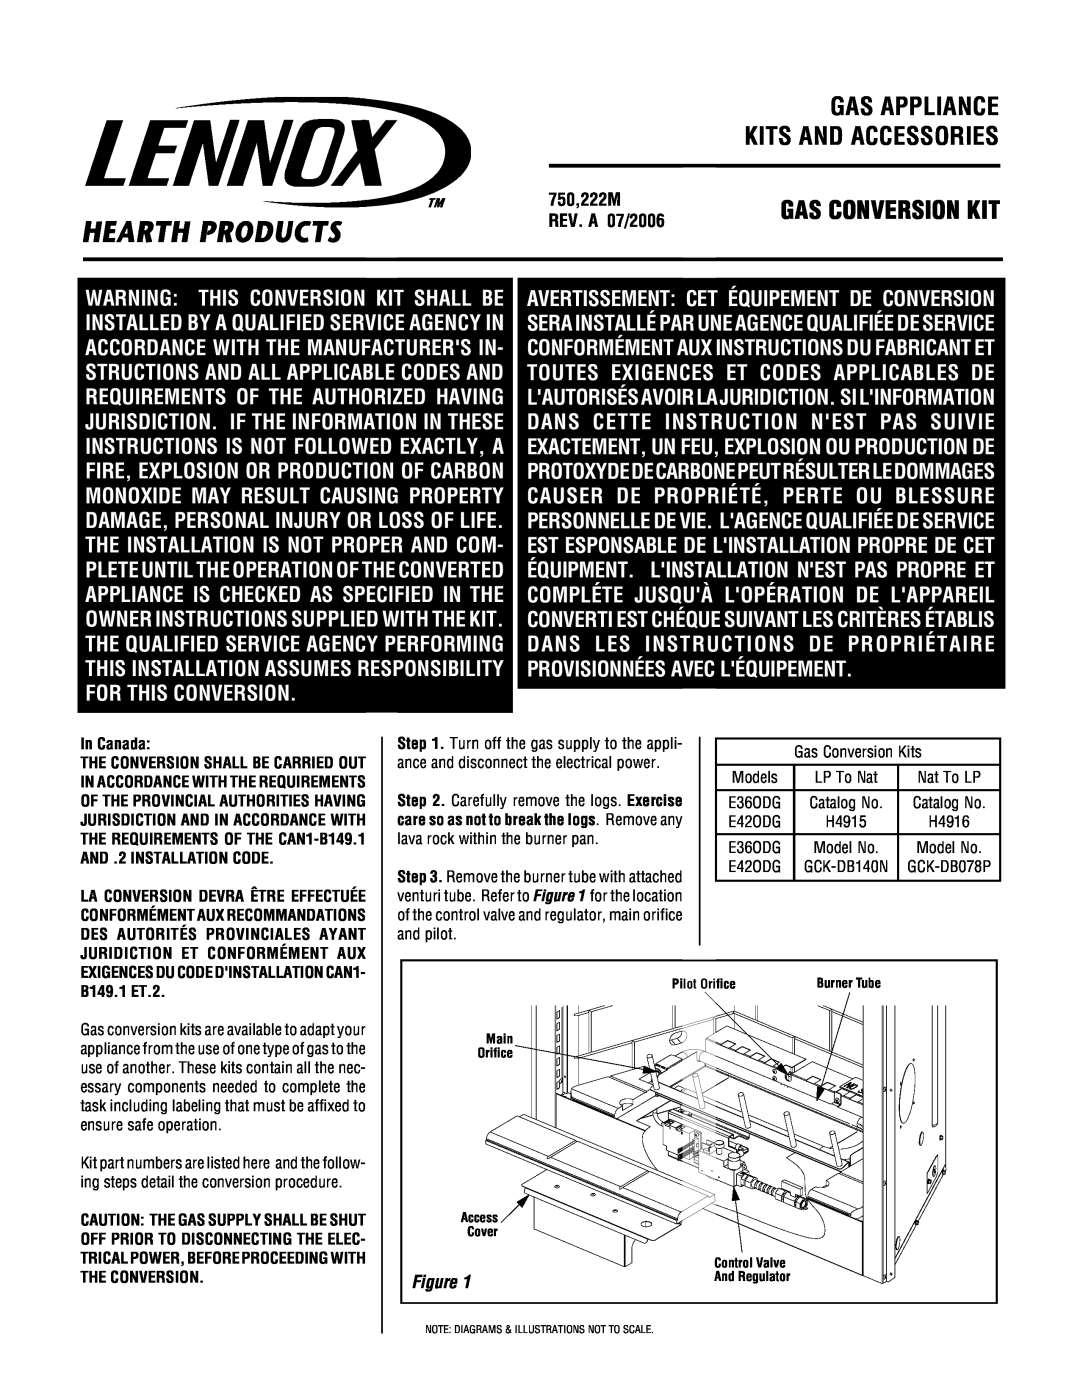 Lennox Hearth E36ODG, E42ODG manual In Canada, AND .2 INSTALLATION CODE, EXIGENCES DU CODE DINSTALLATION CAN1- B149.1 ET.2 